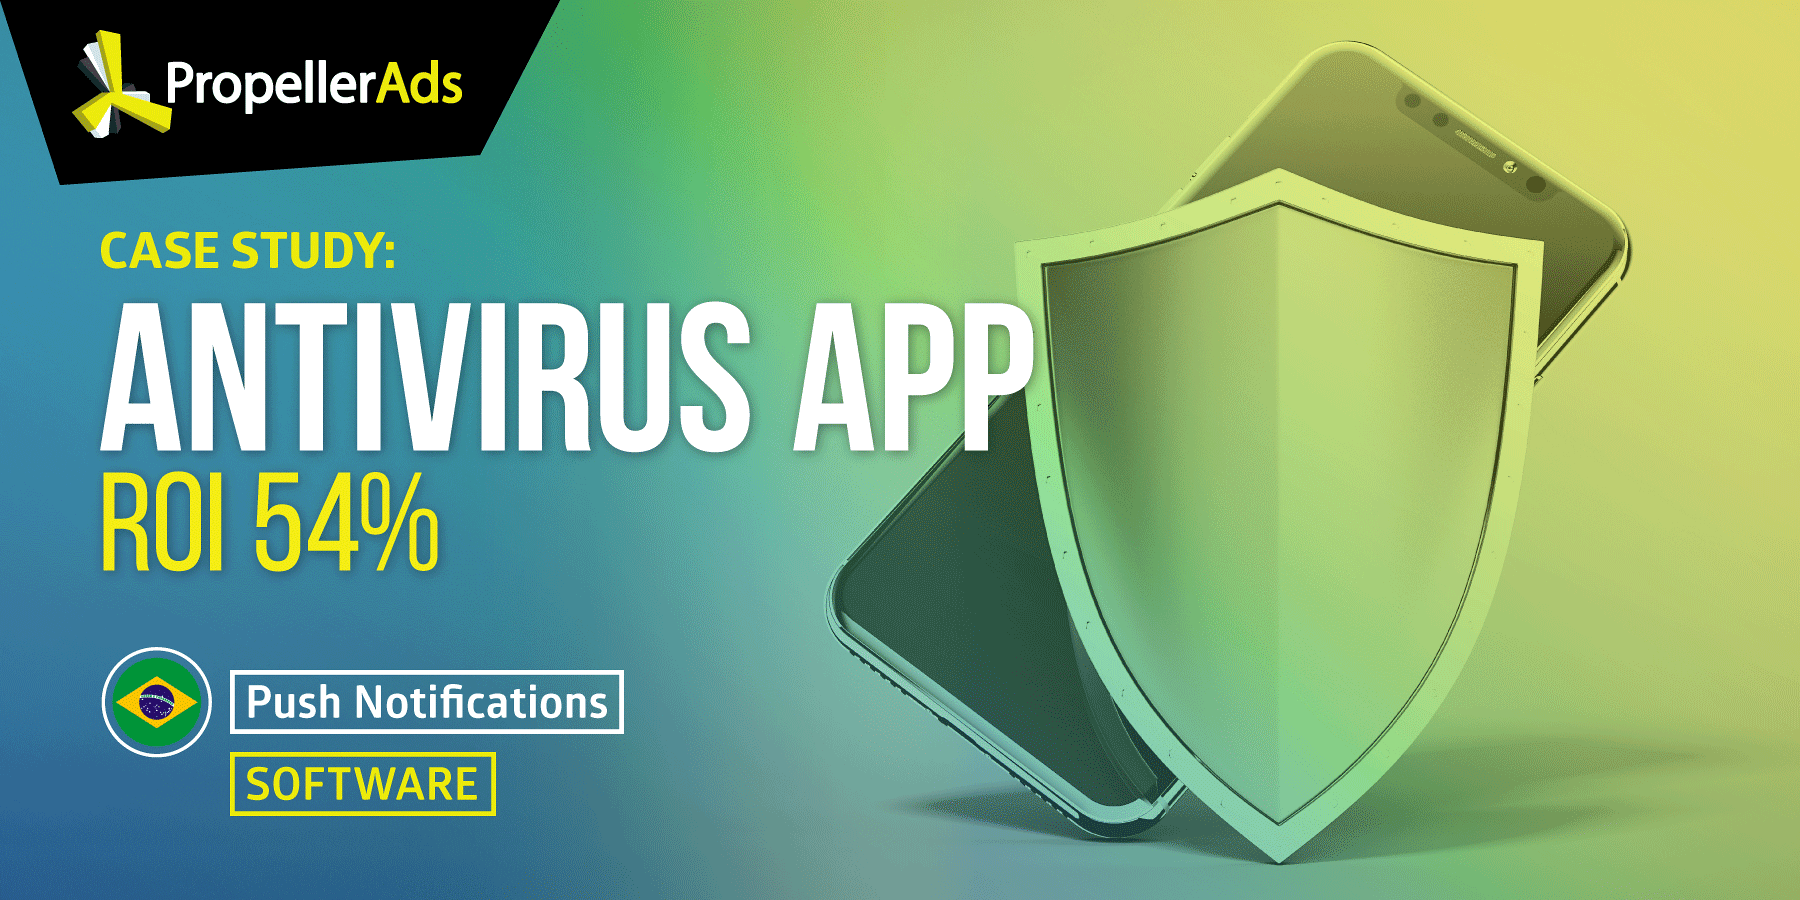 antivirus app Case study